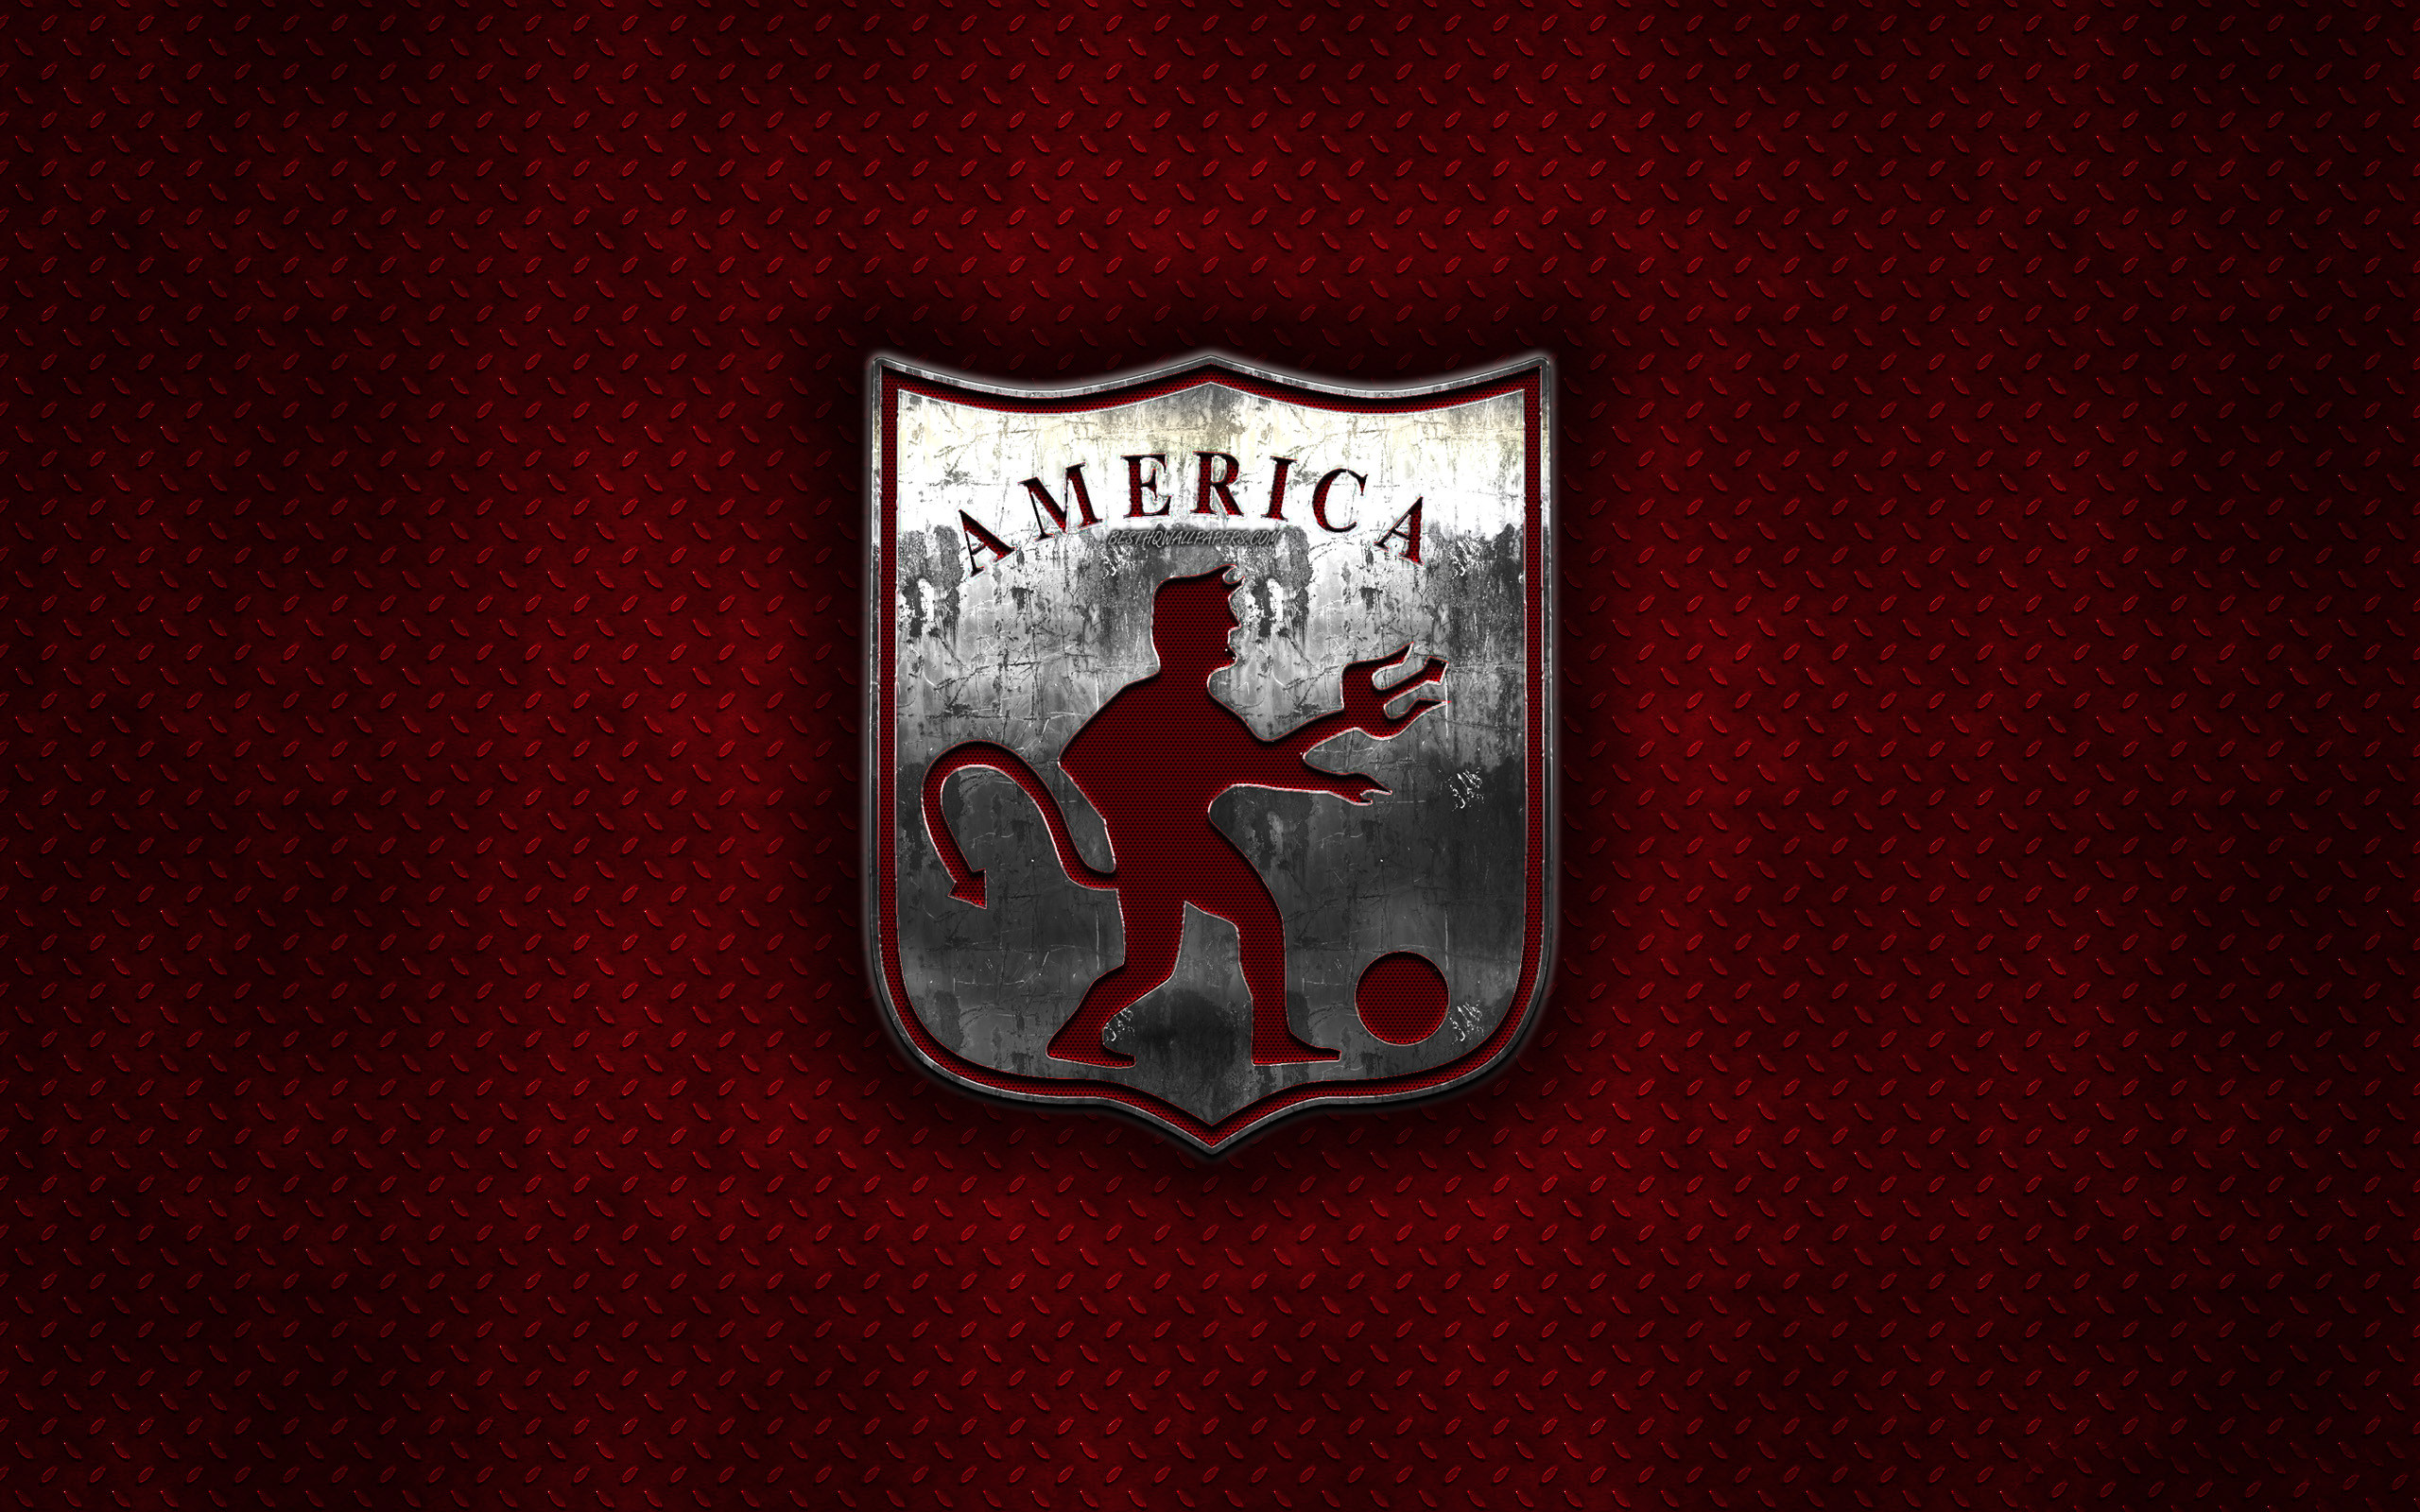 2560x1600 Cd america de cali colombian football club red metal texture metal logo  emblem jpg  America